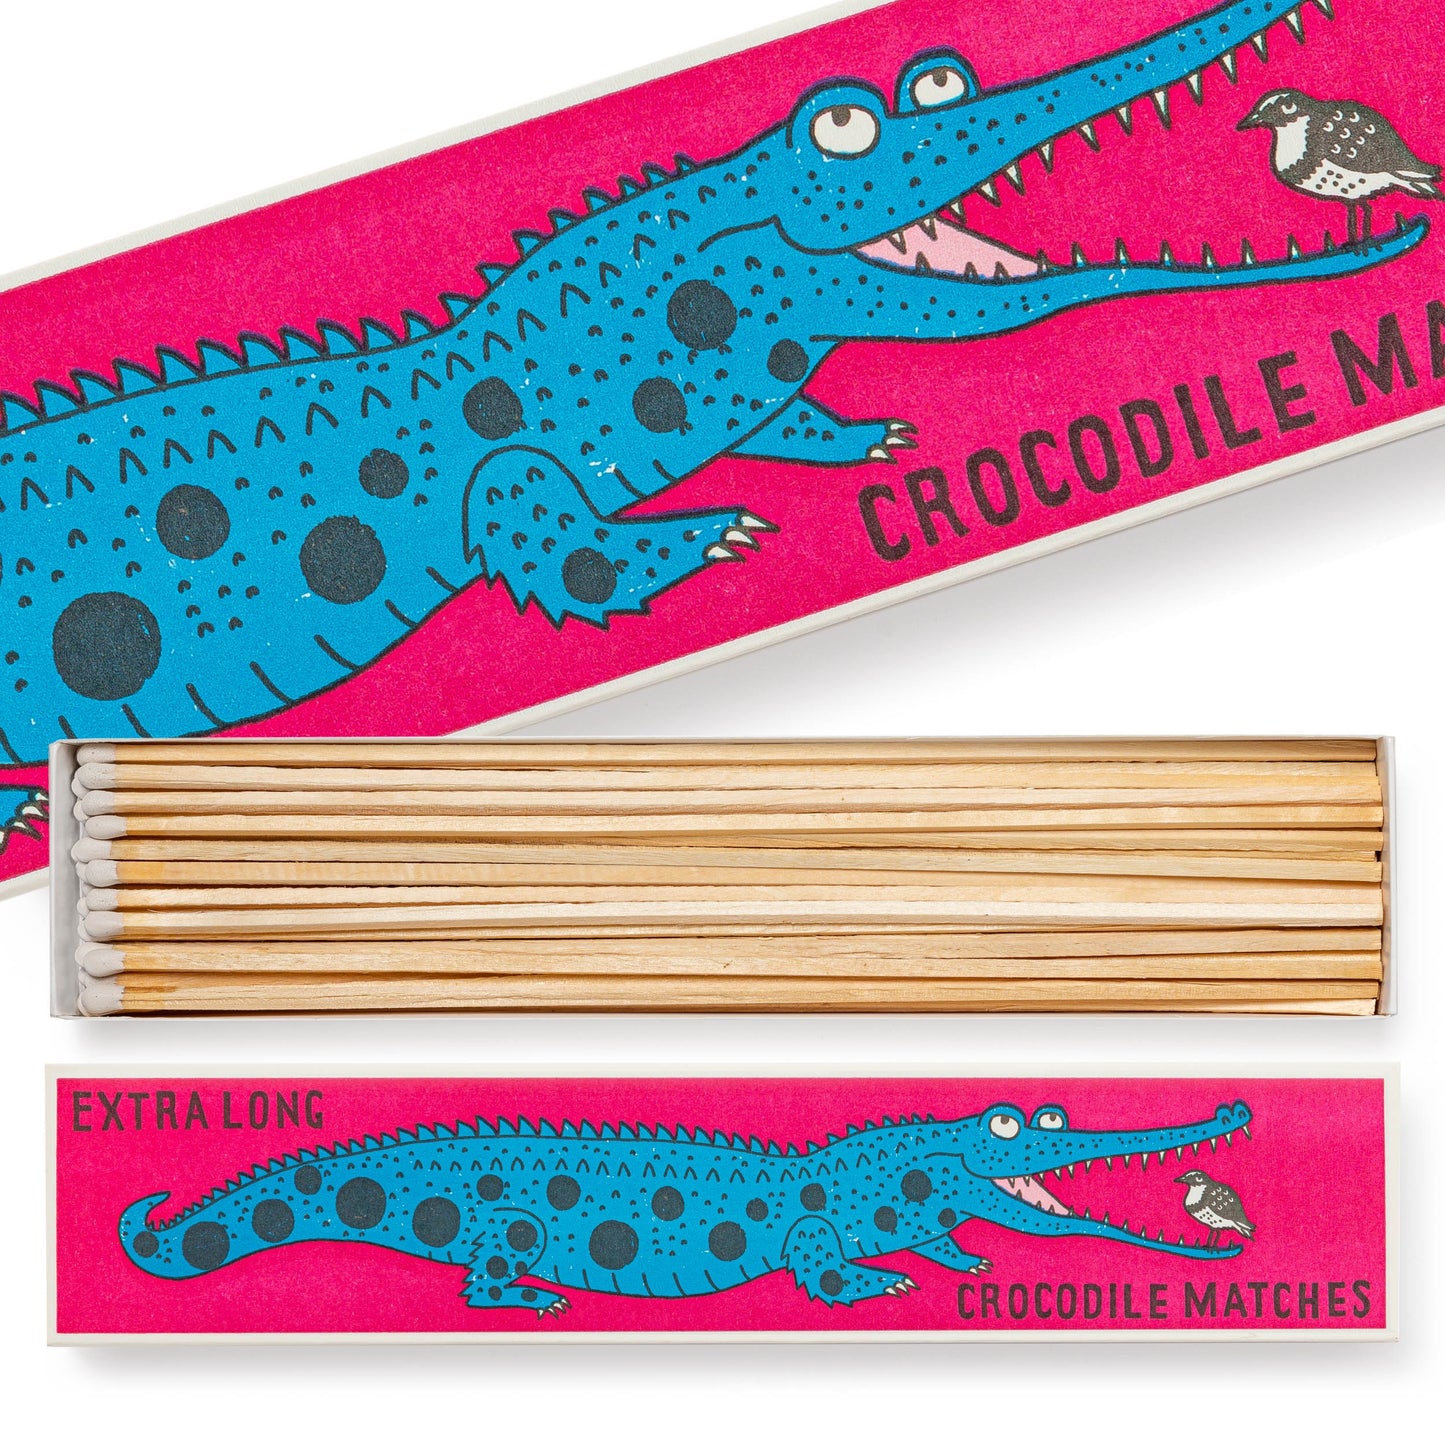 Extra Long Crocodile Matches